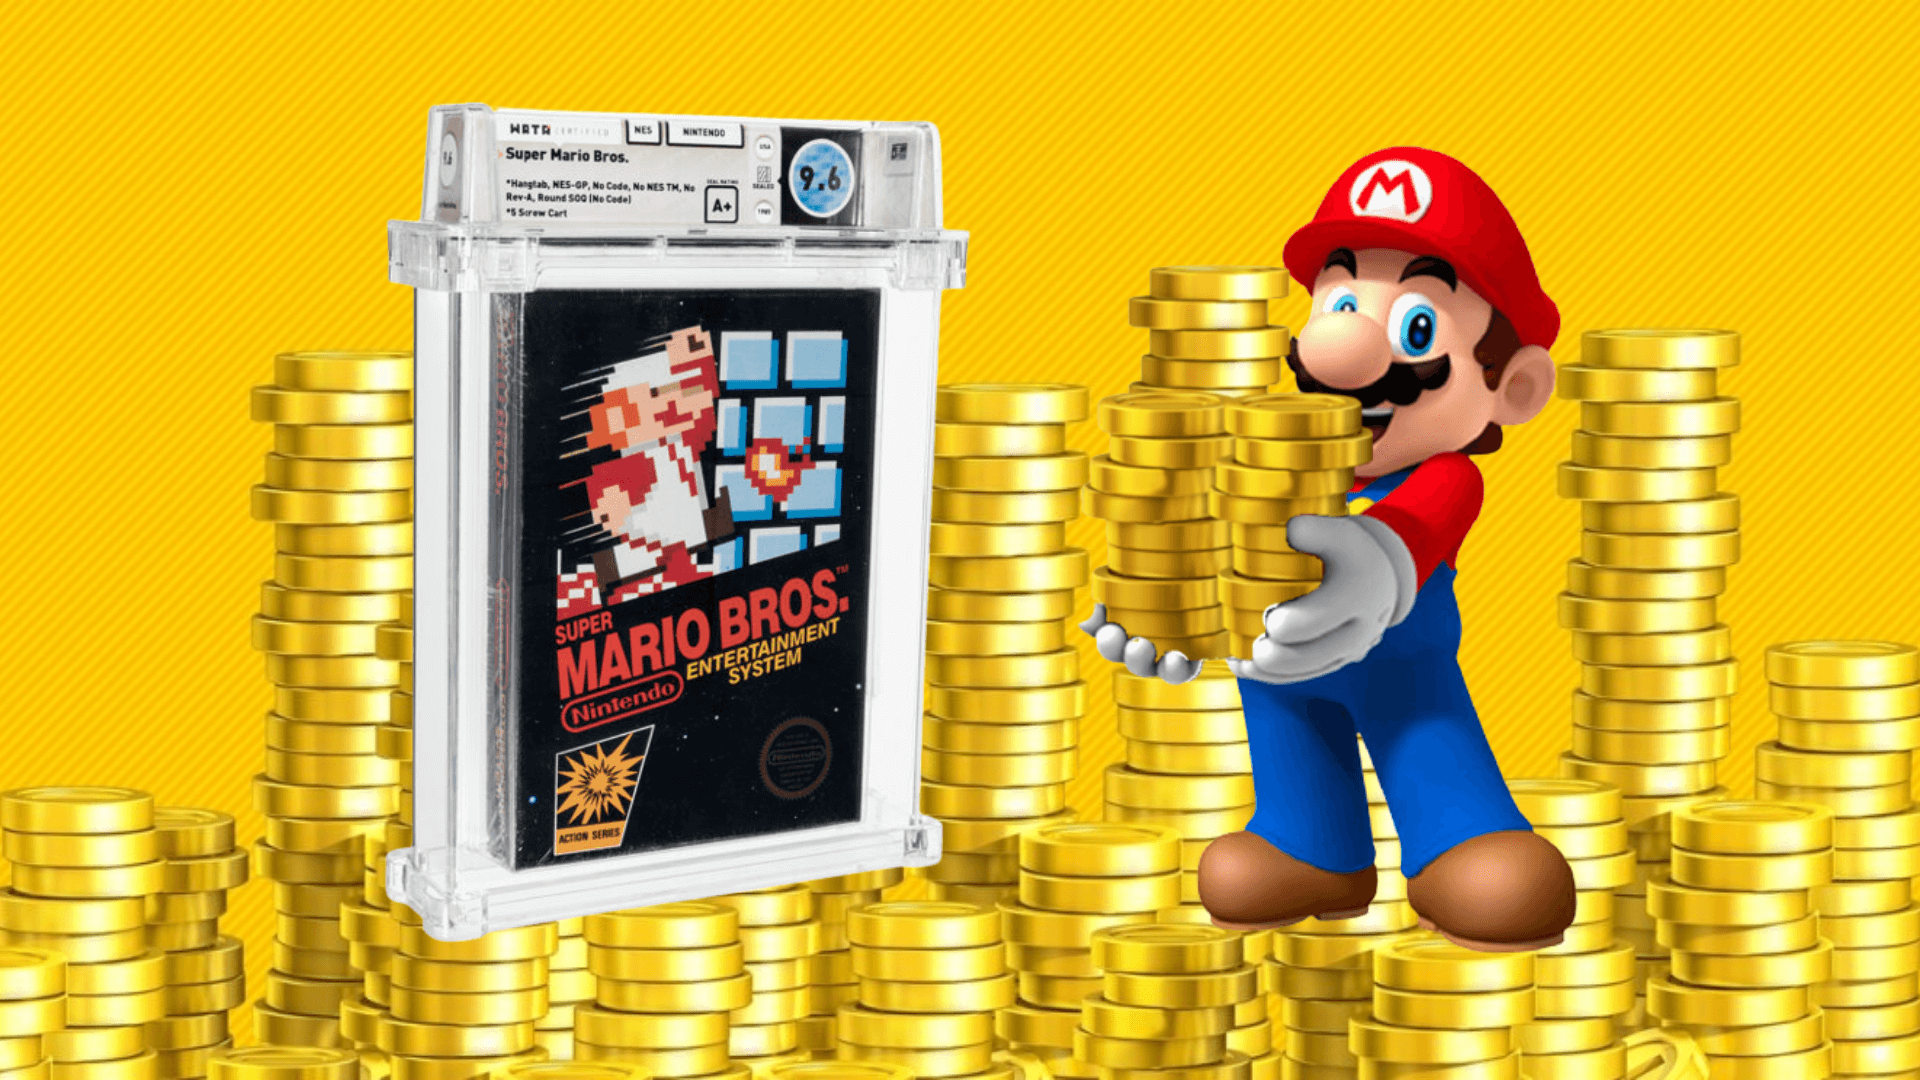 Super Mario Bros NES, expensive video game